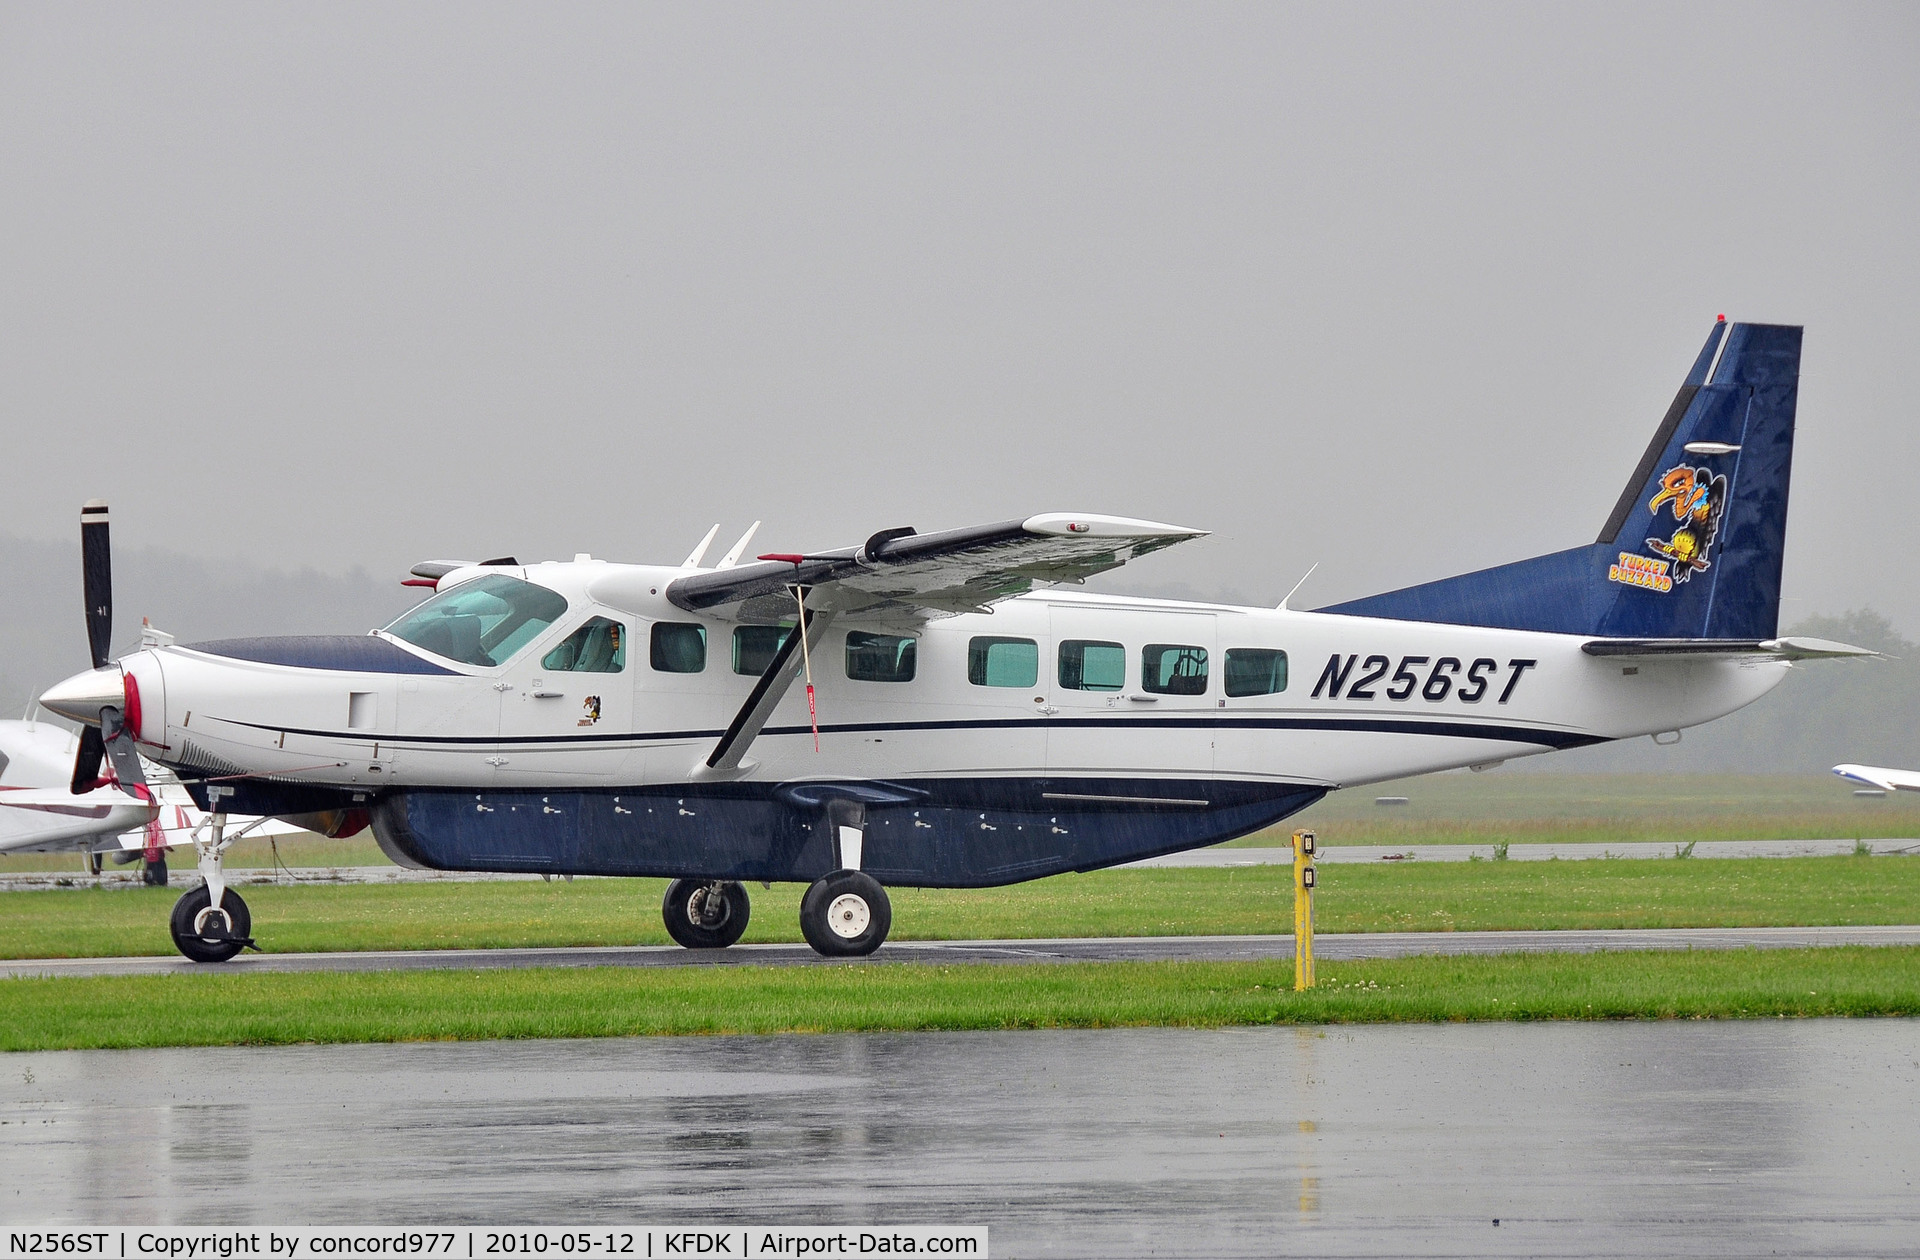 N256ST, 2007 Cessna 208B C/N 208B1256, Seen at KFDK on 5/12/2010.